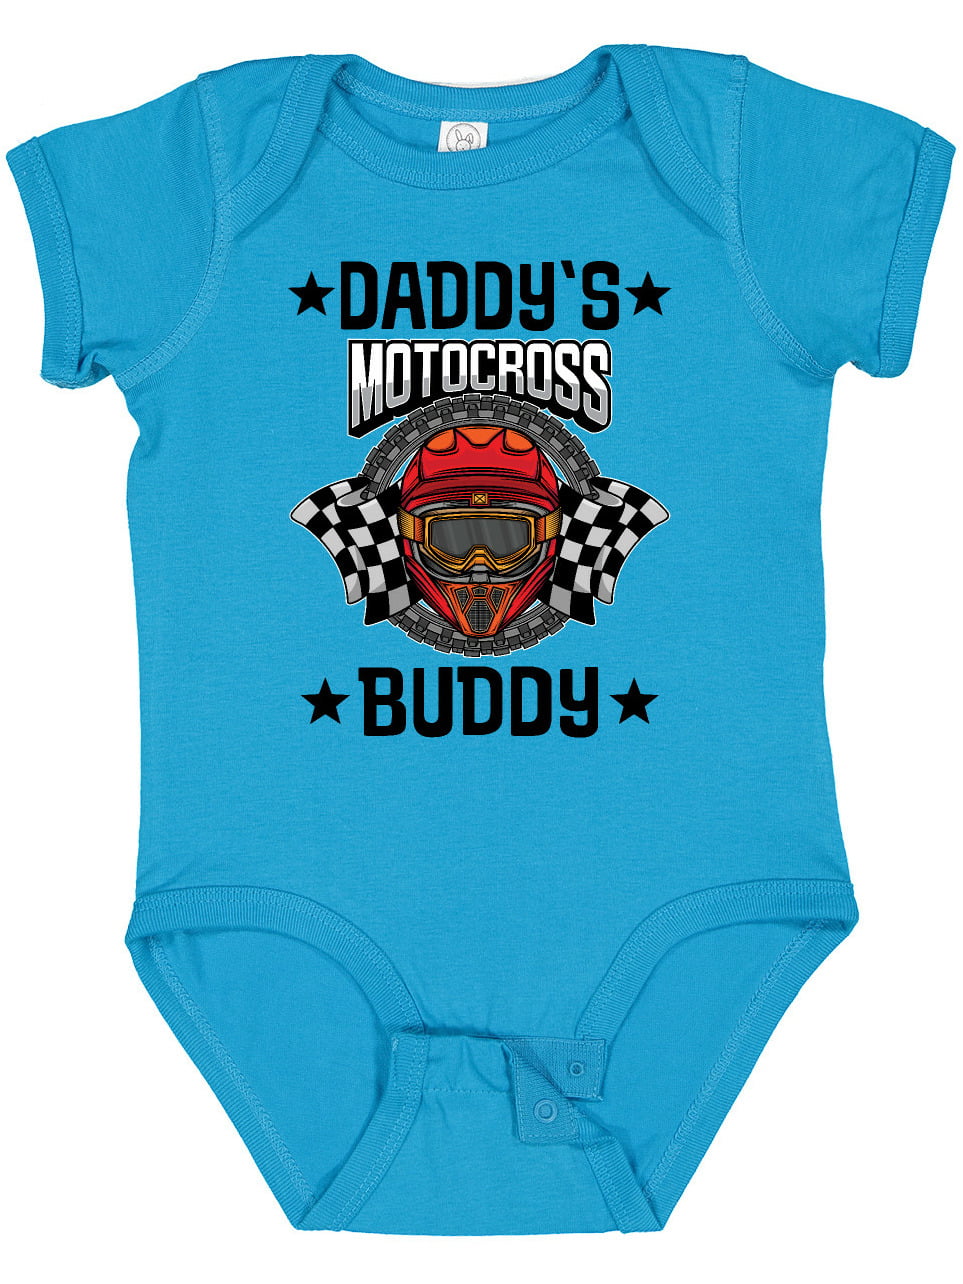 newborn-24 months daddy's new riding buddy onesie biker baby bodysuit baby shower gift bikes Motorcycle baby shirt new baby boy outfit